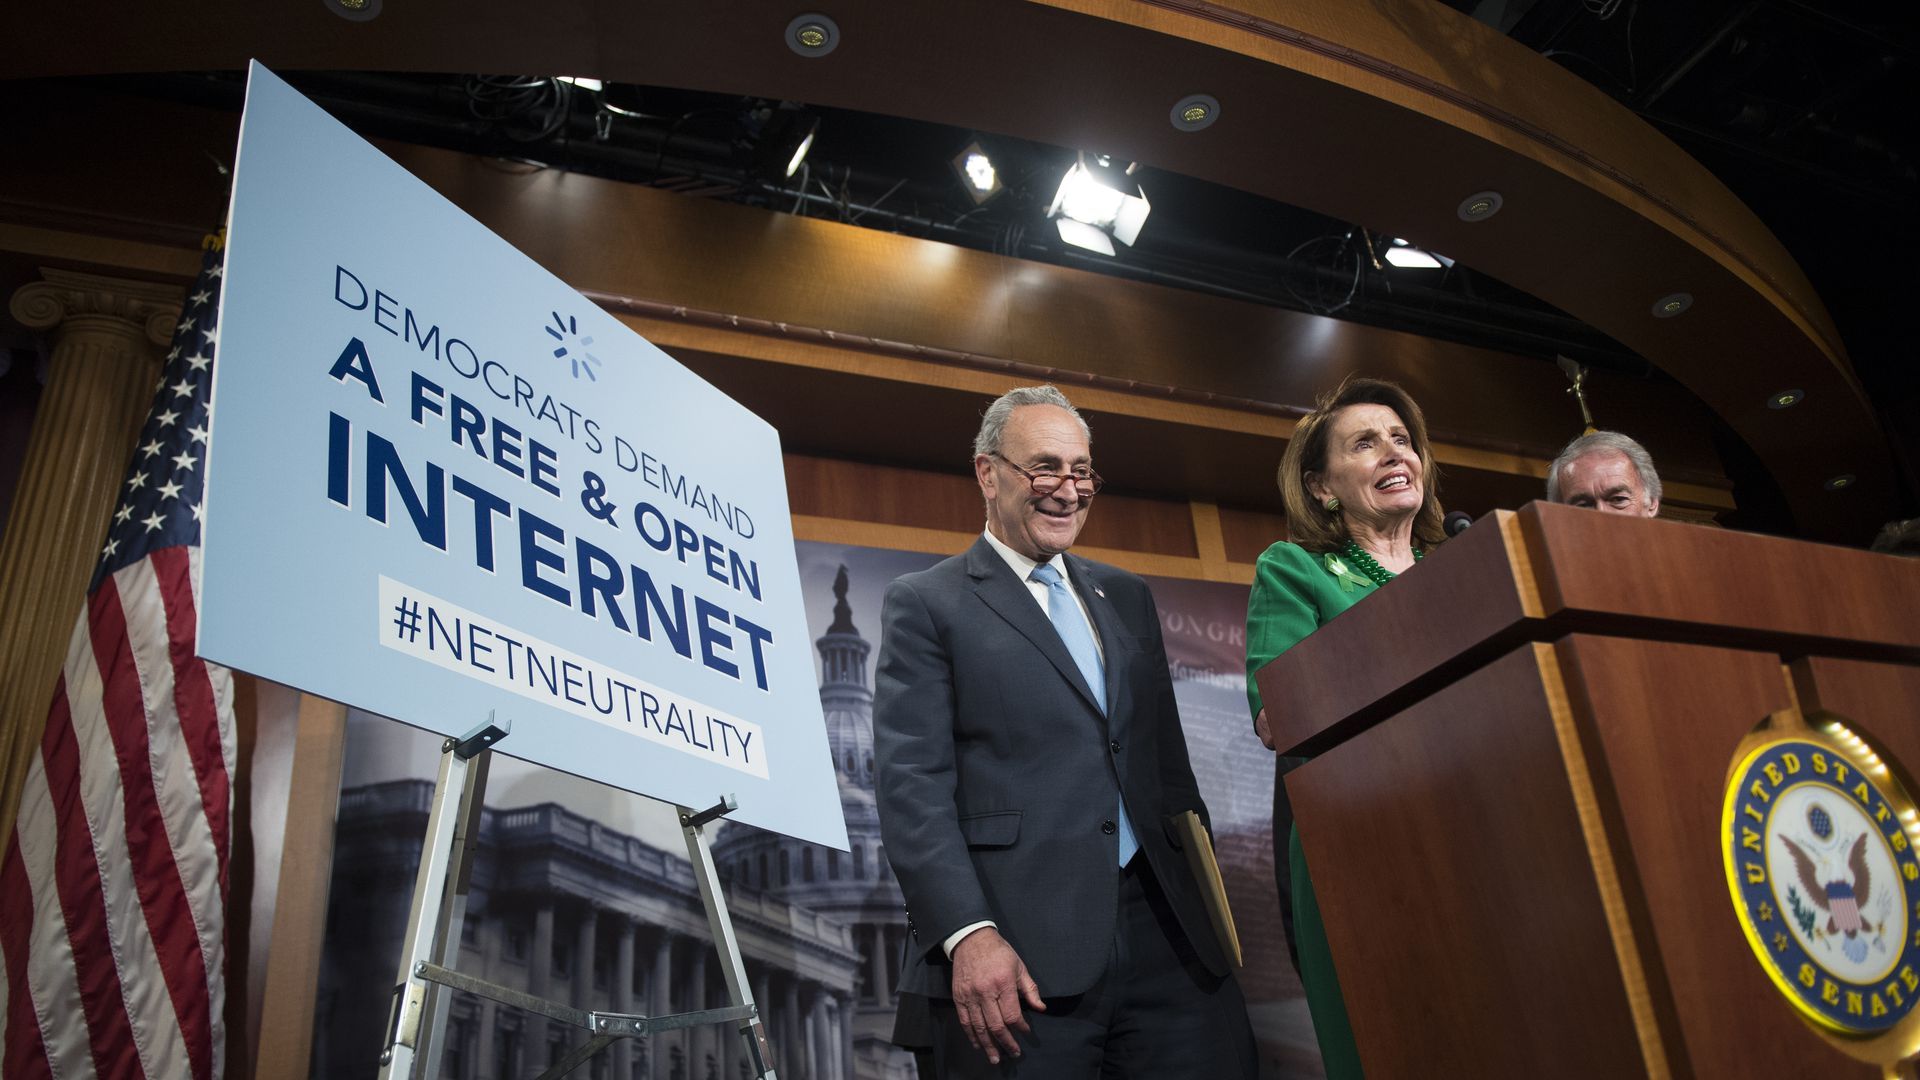 Chuck Shumer and Nancy Pelosi at an event promoting net neutrality legislation.